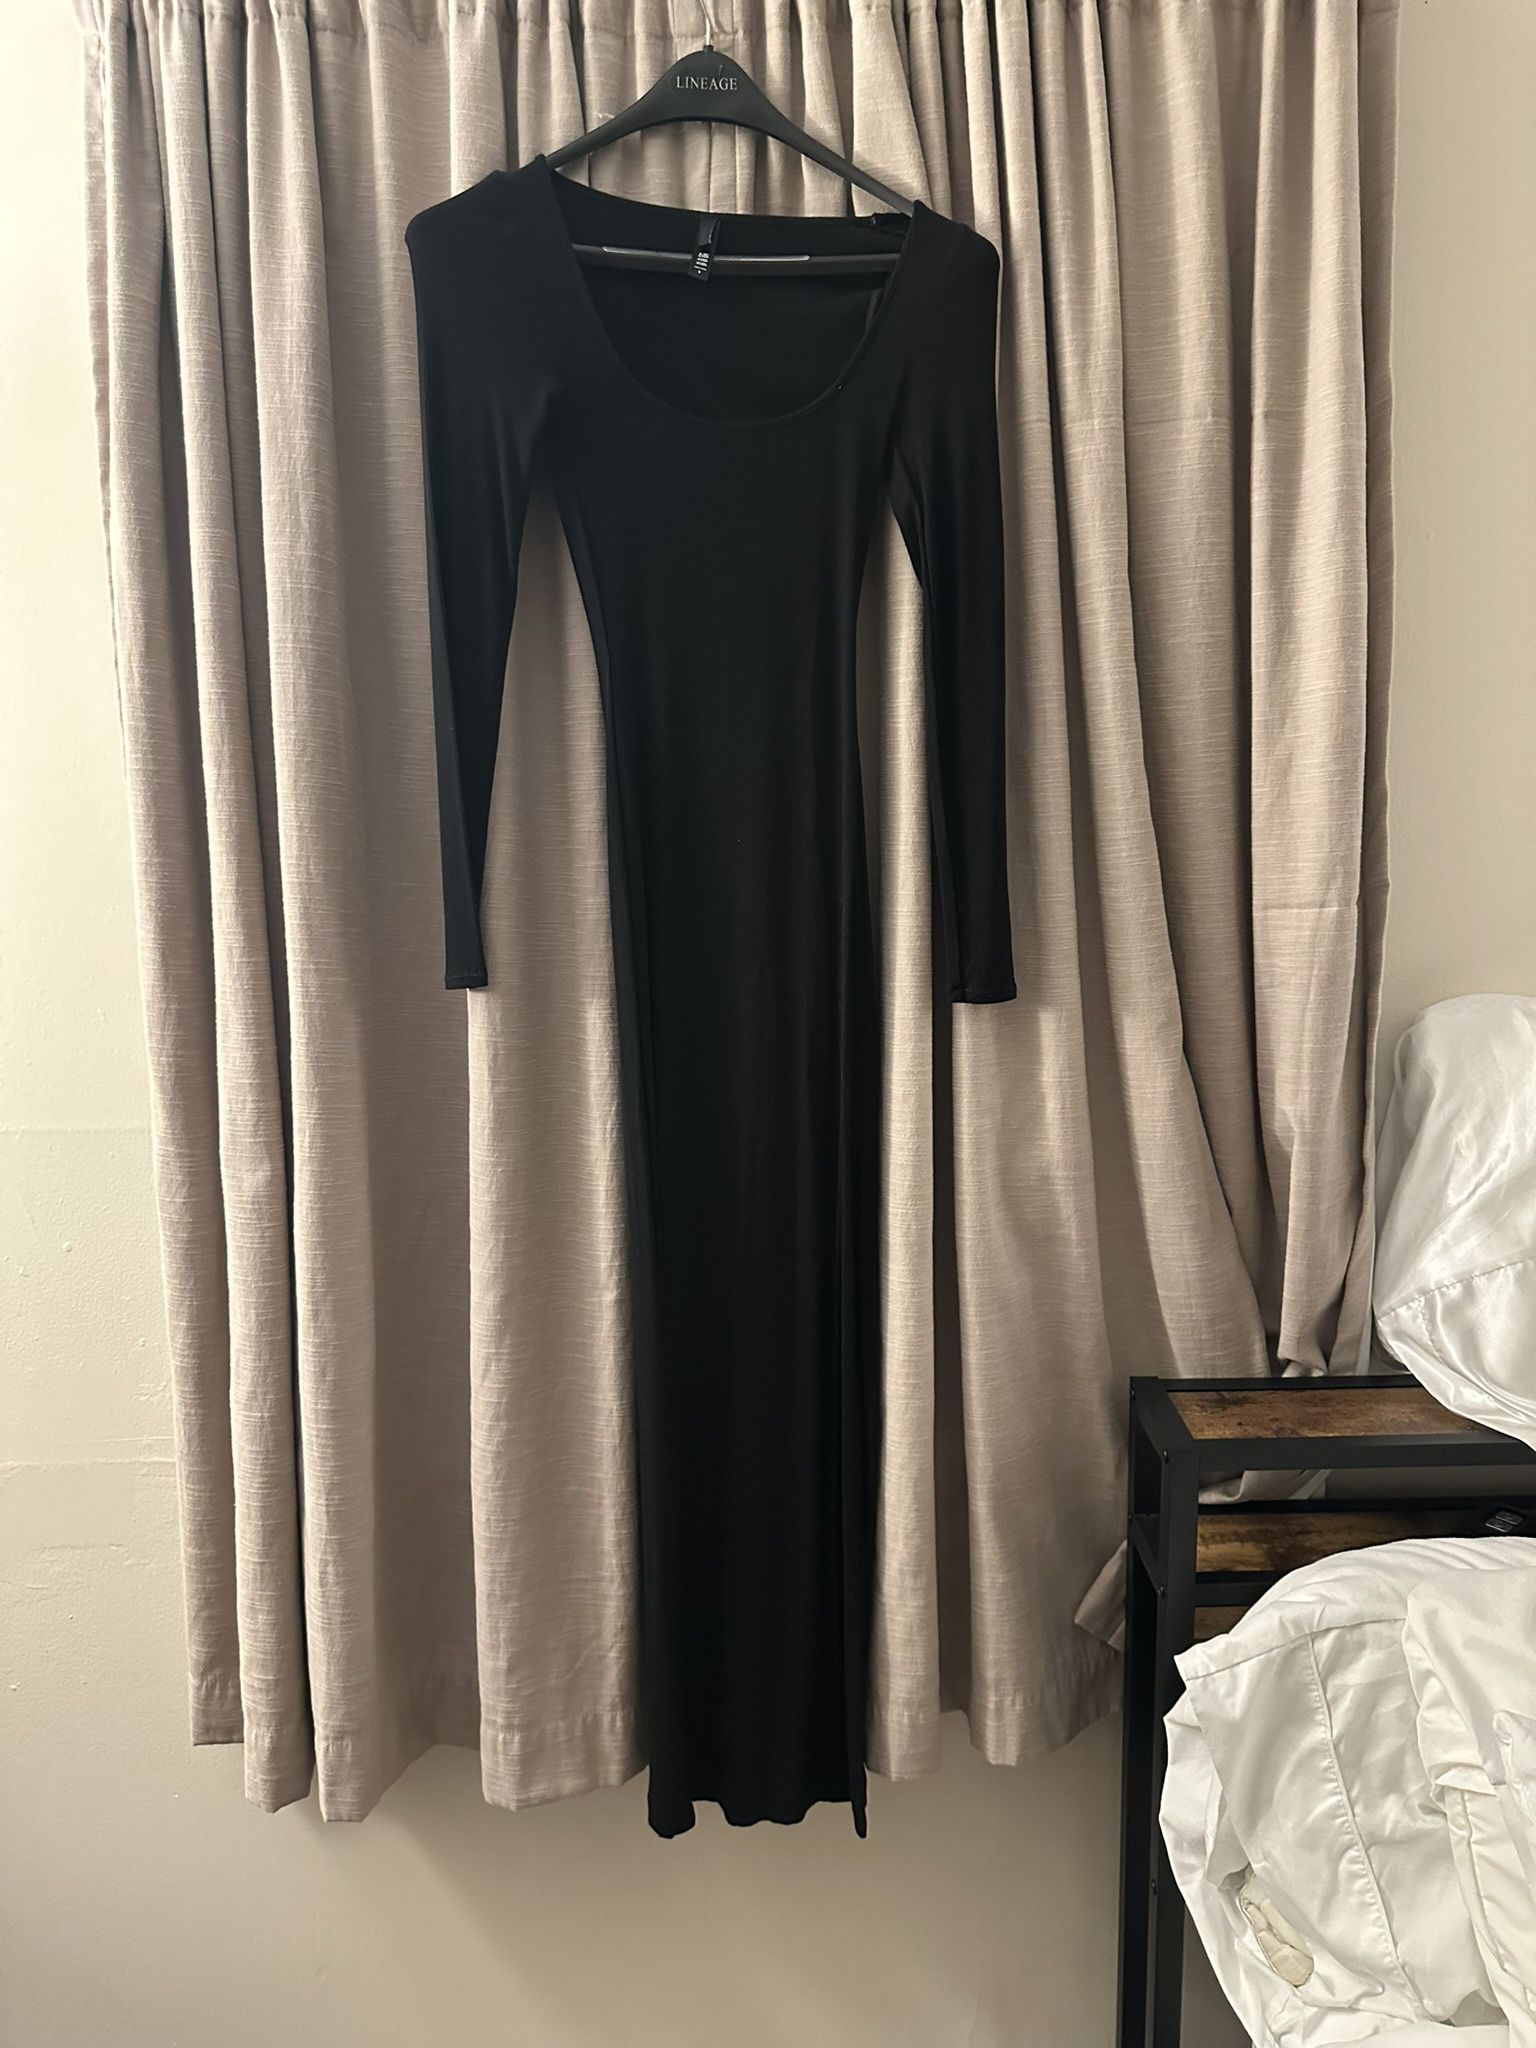 Black Skims dress size small NWOT